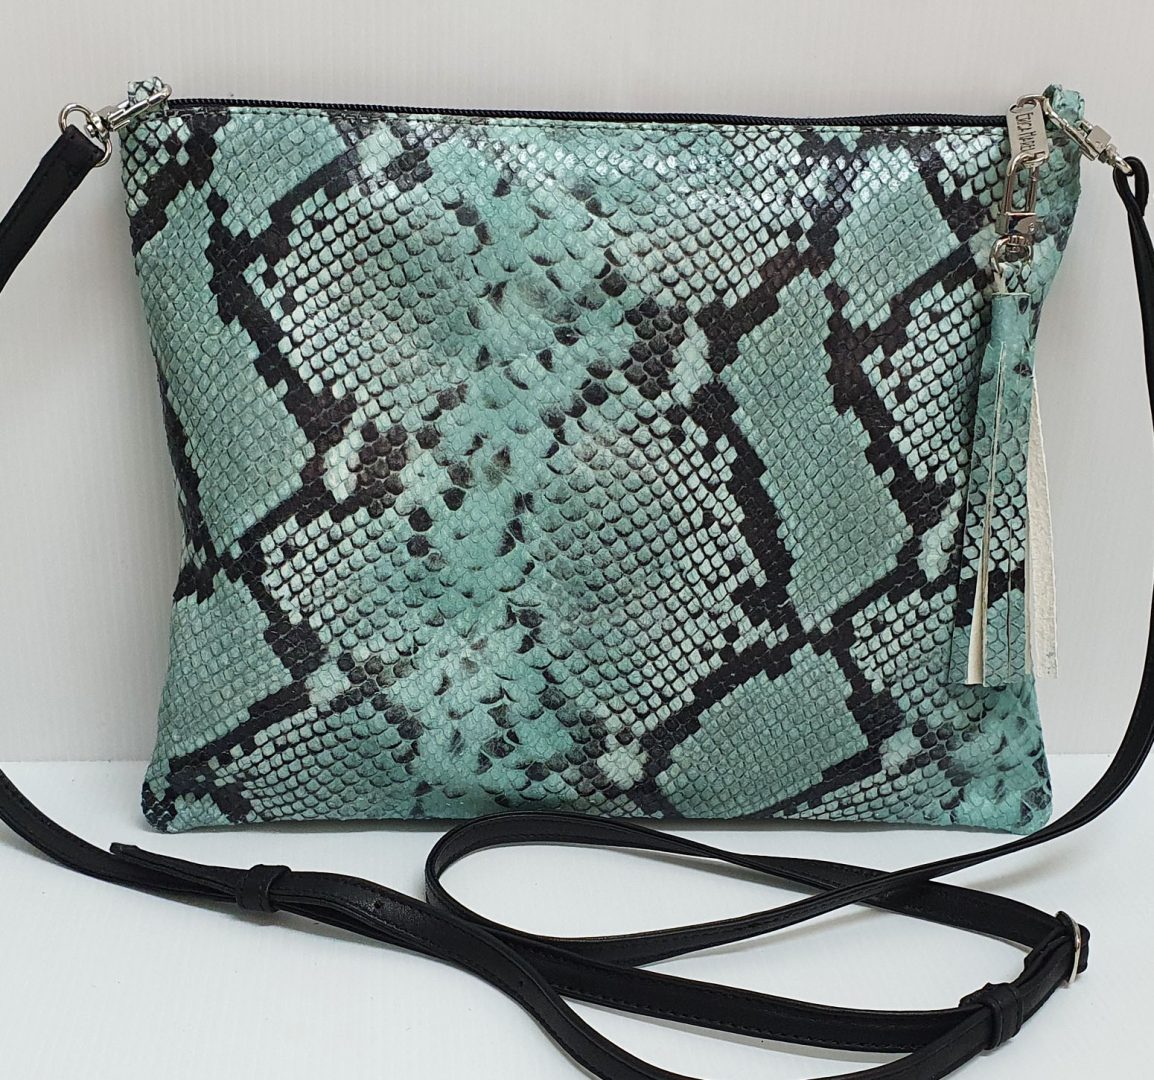 Turquoise Python Leather Shoulder Bag Clutch